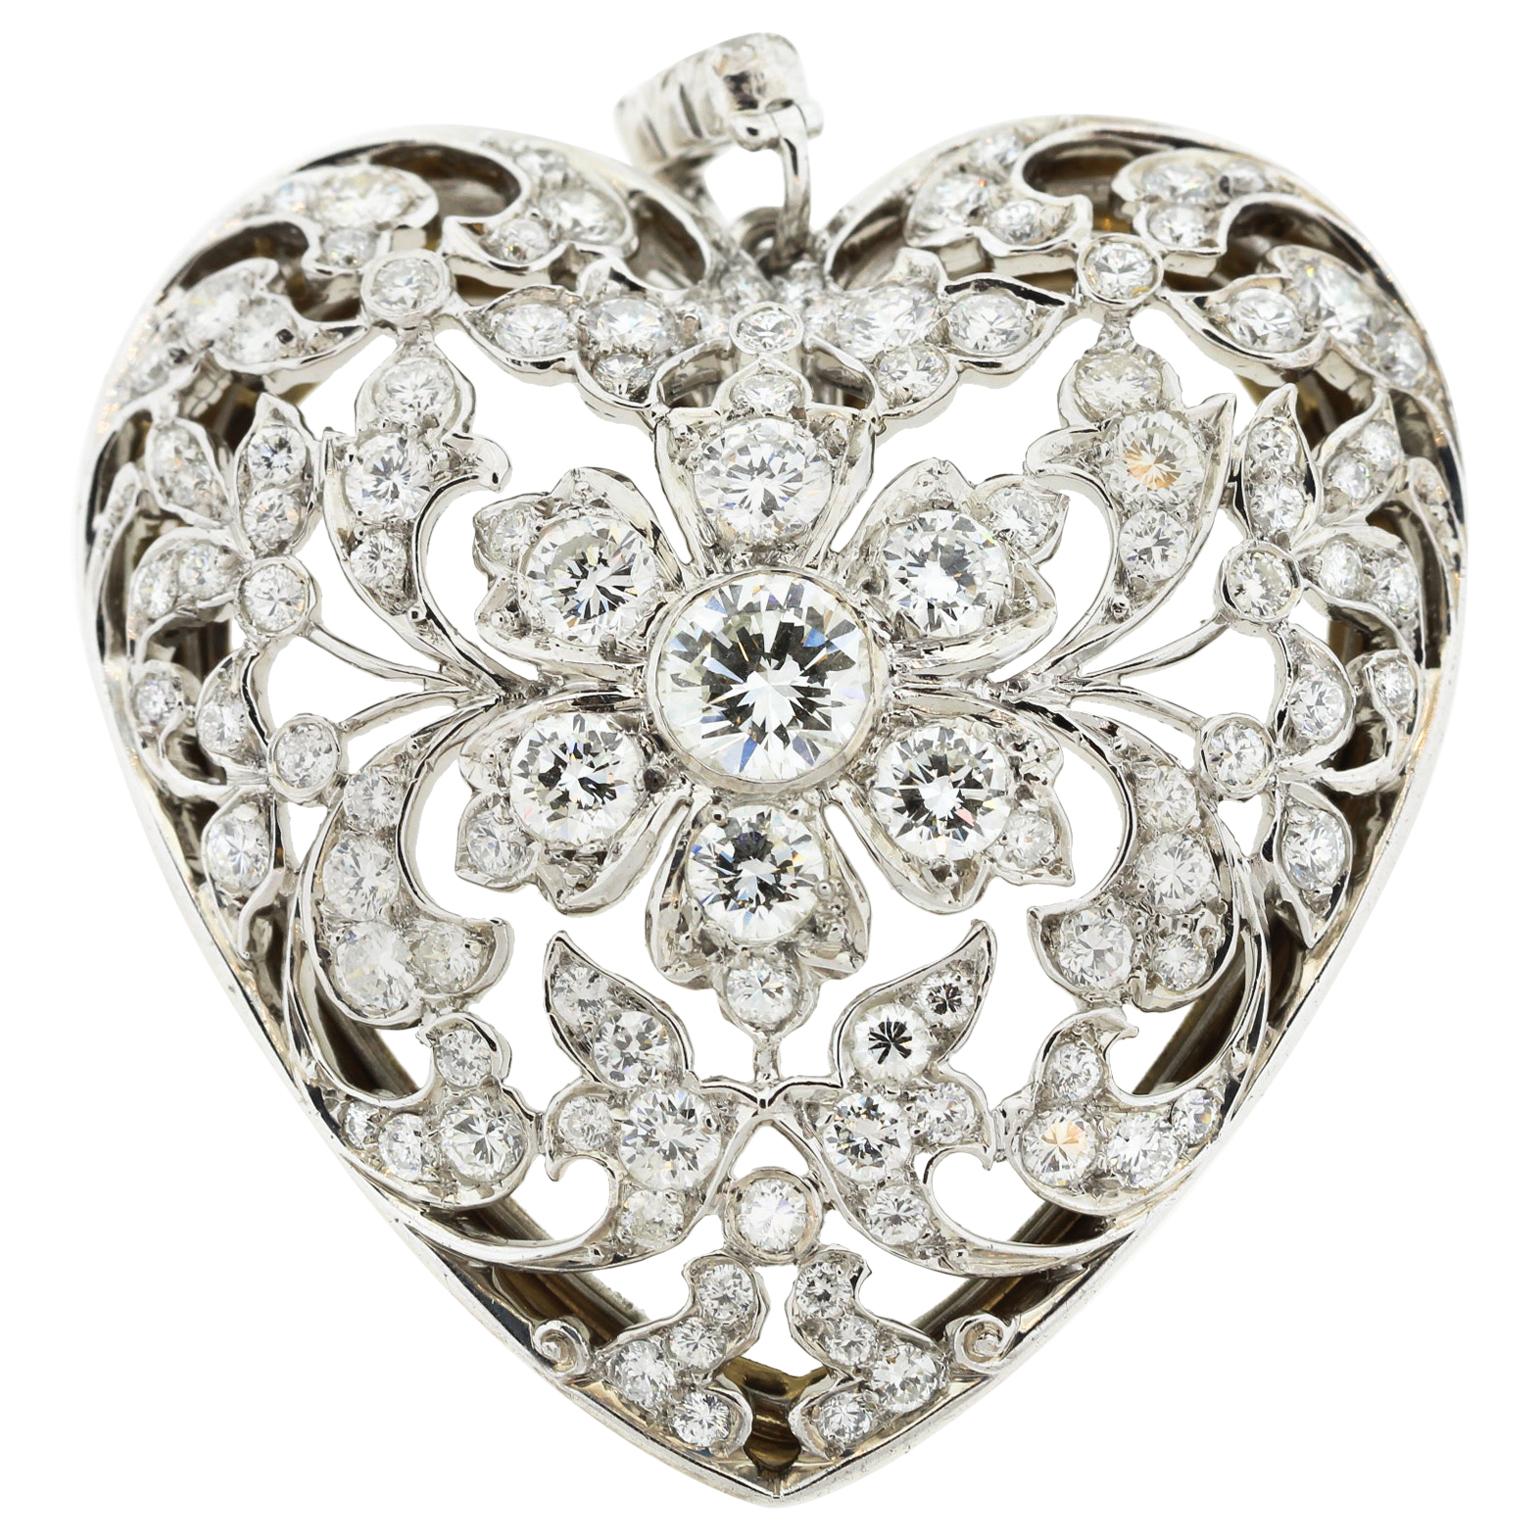 Antique Edwardian Platinum and Gold Diamond Heart Pendant with Original Crystal